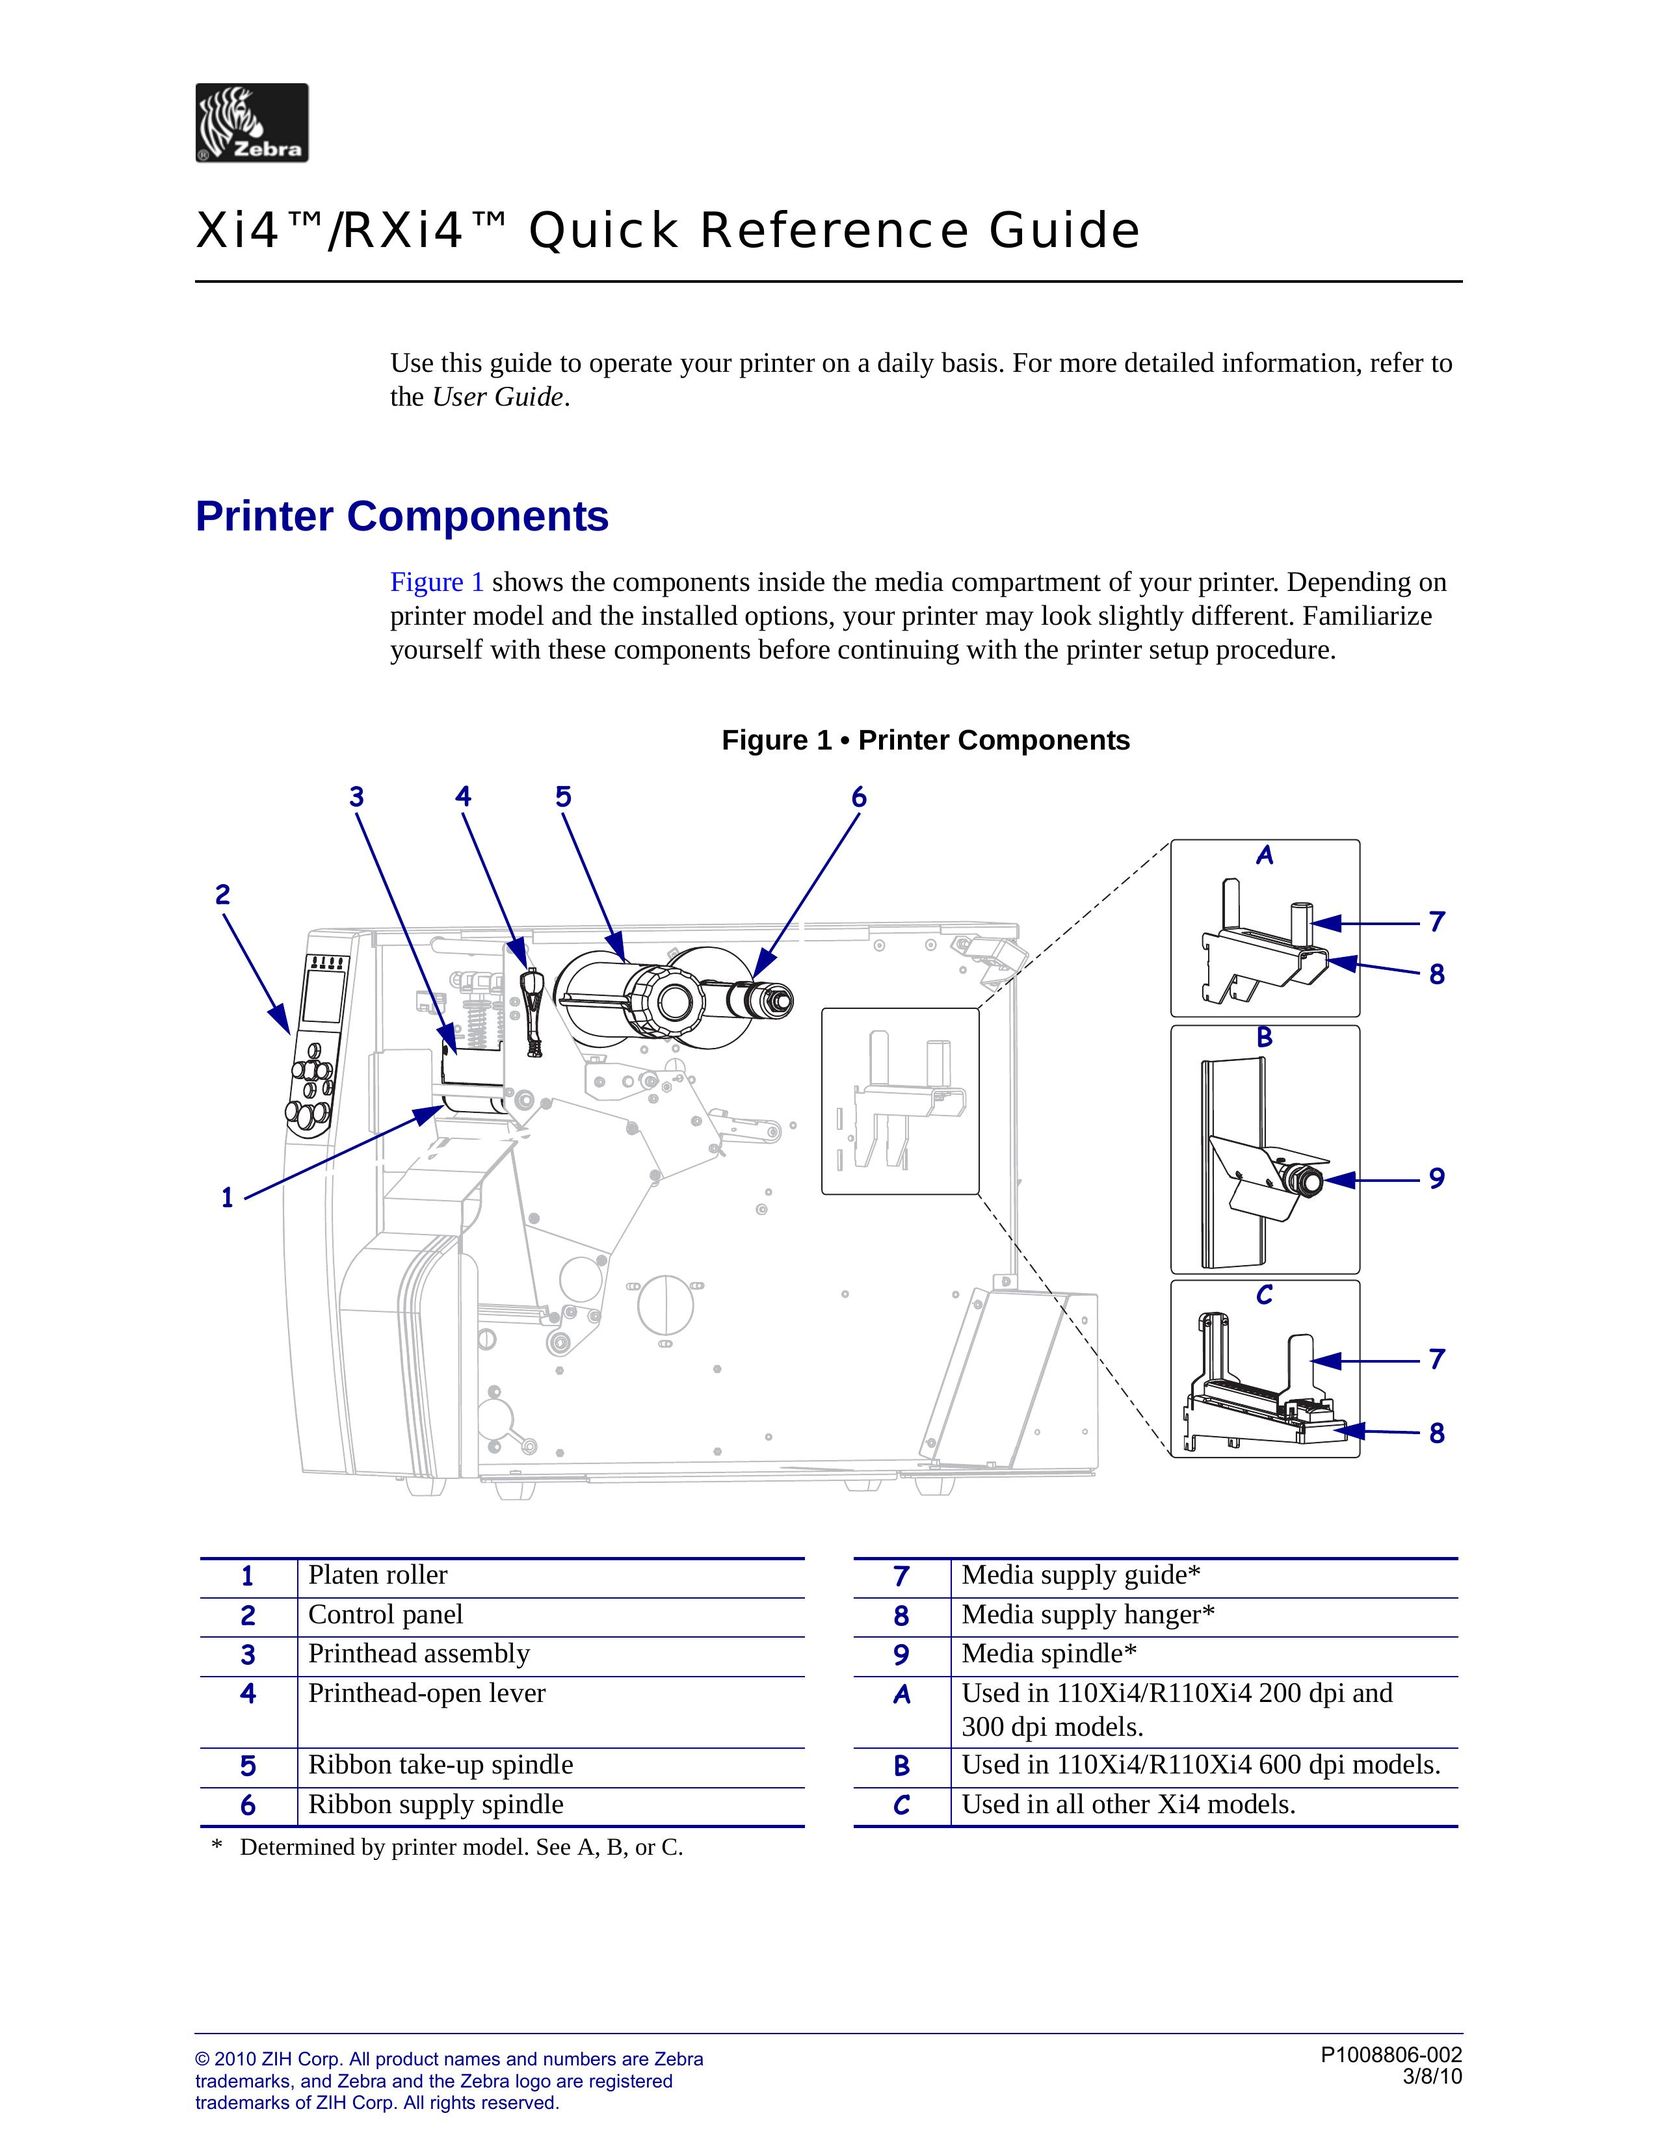 Zebra Technologies RXi4 All in One Printer User Manual